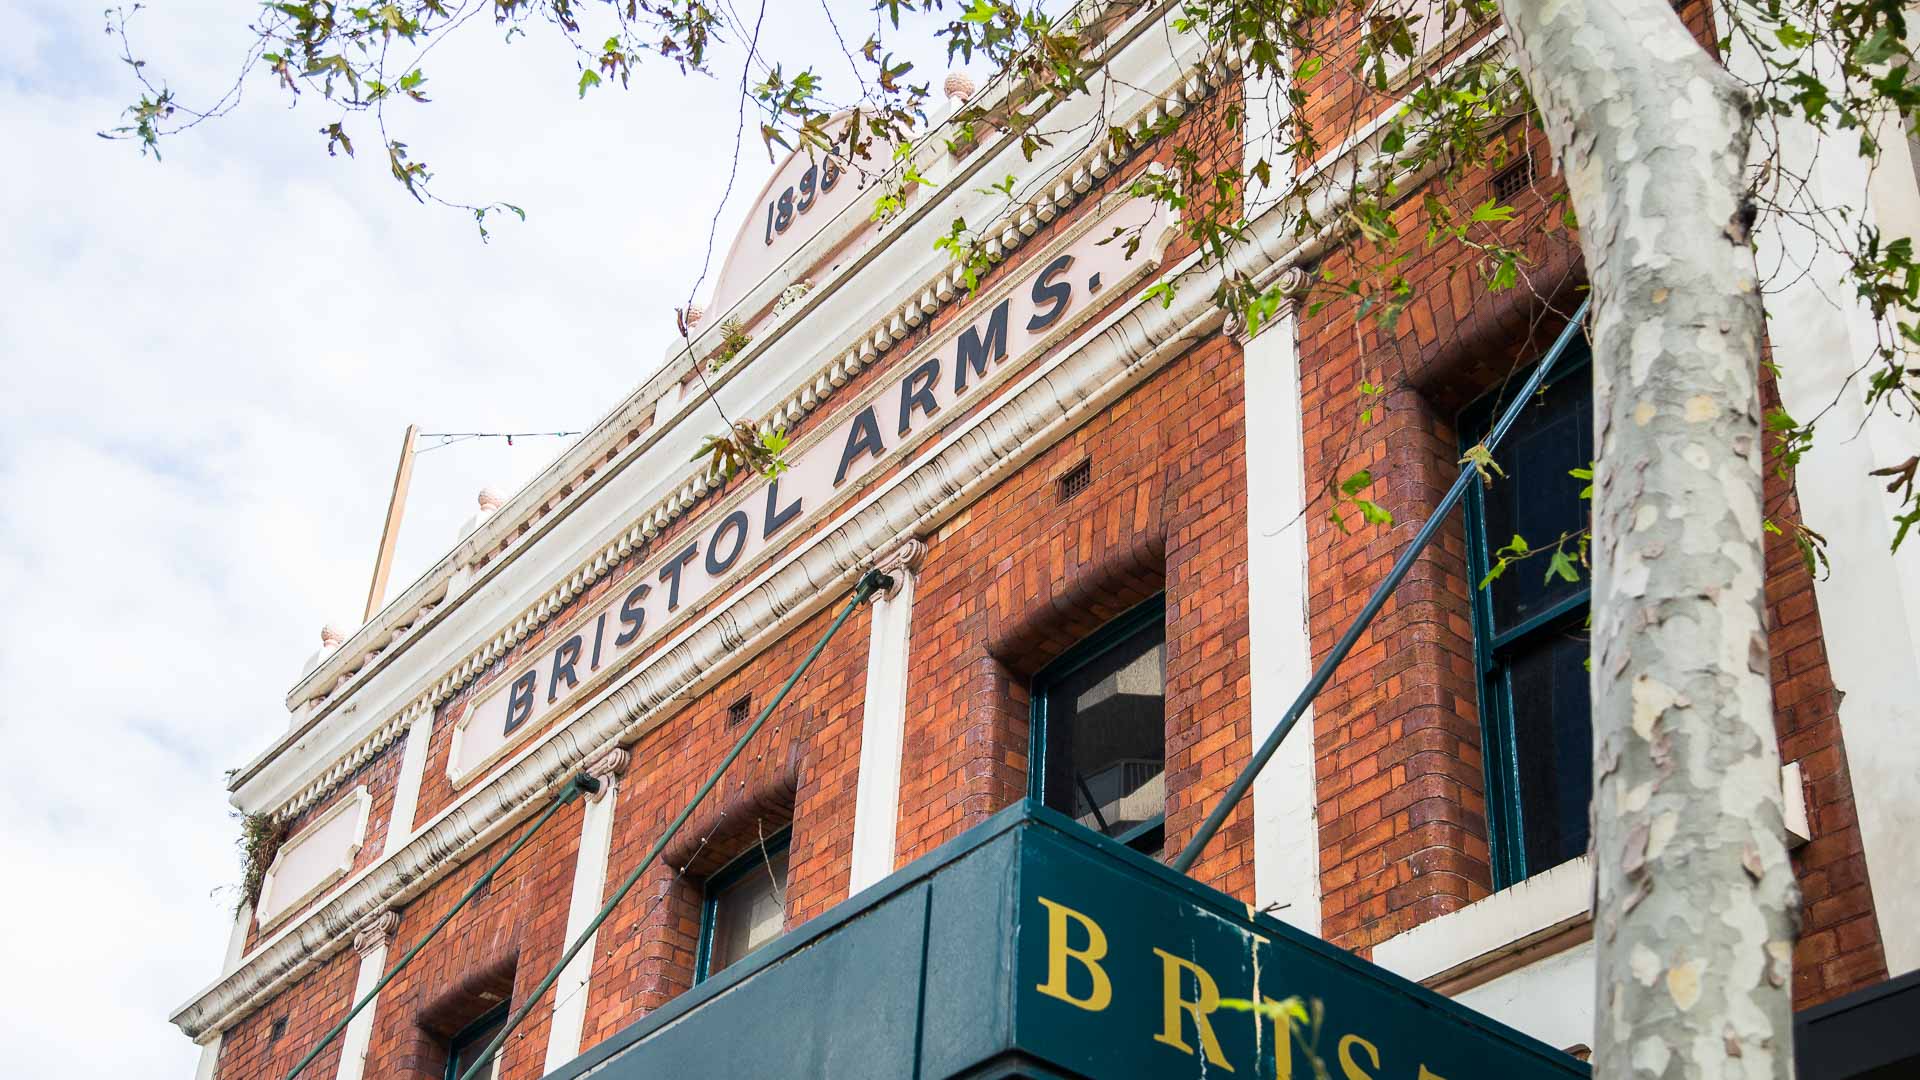 Bristol Arms Hotel - CLOSED